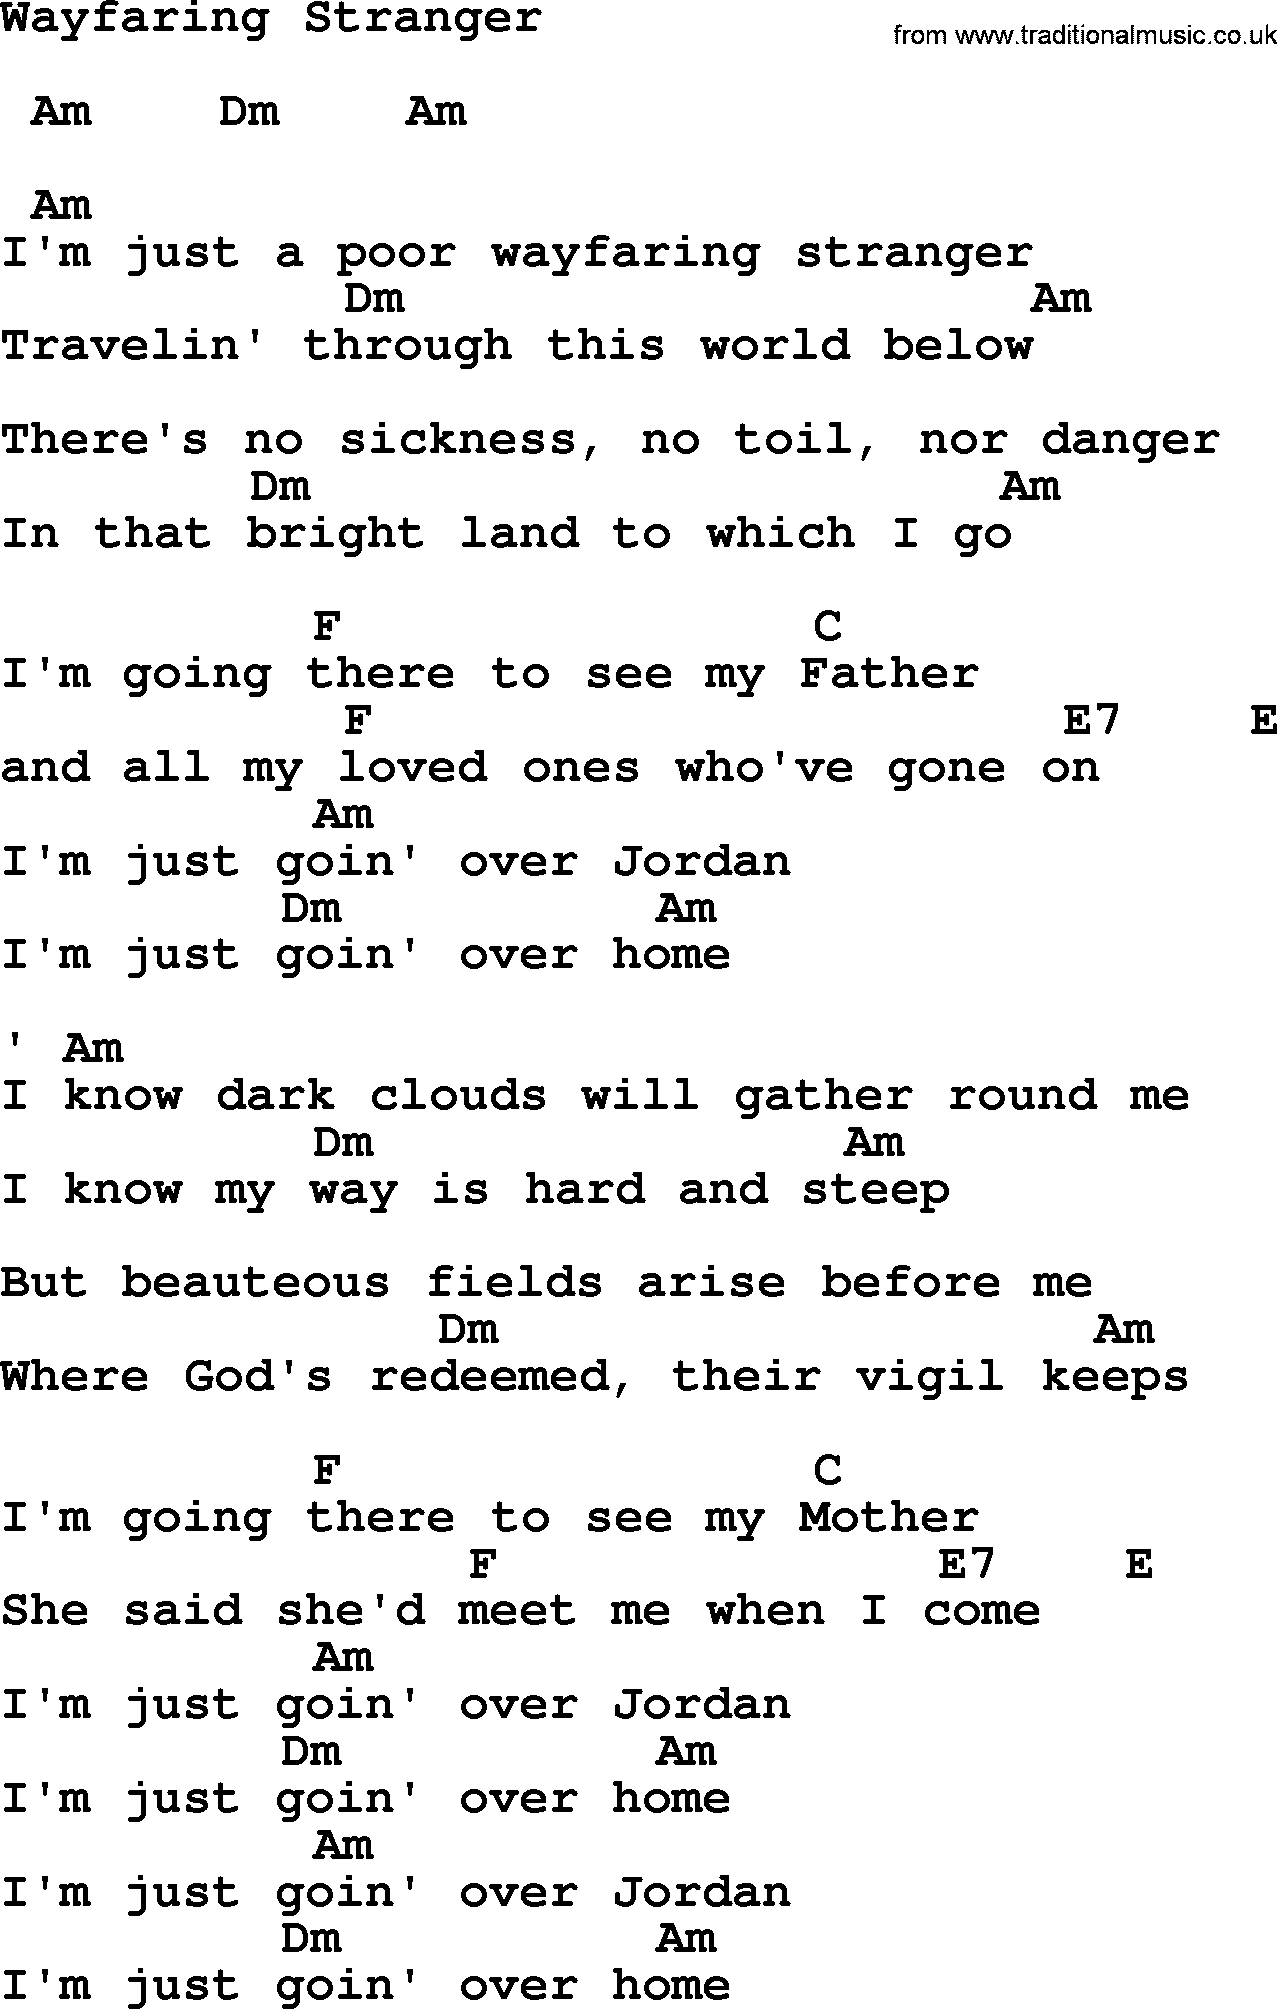 Johnny Cash song Wayfaring Stranger, lyrics and chords